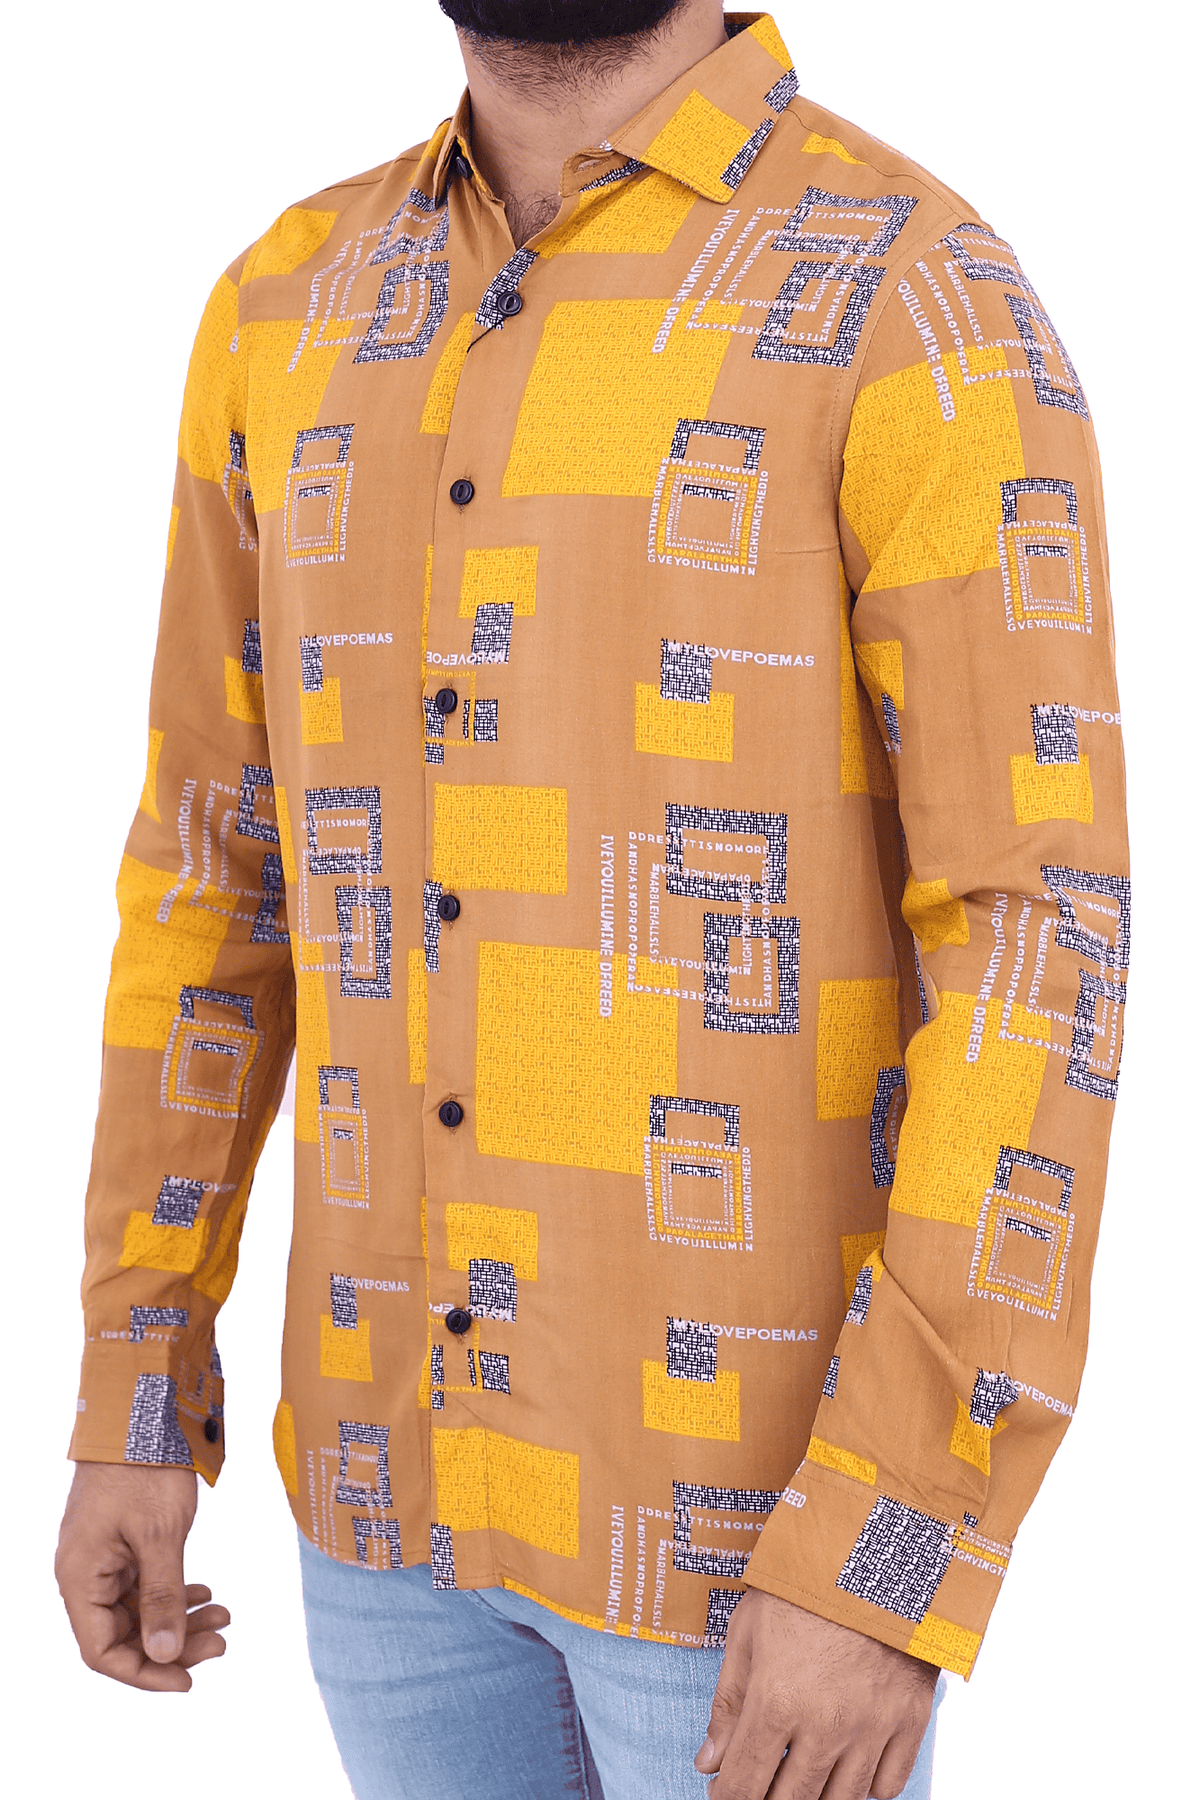 Men's Casual Shirt SHC-1741 Printed Yellow